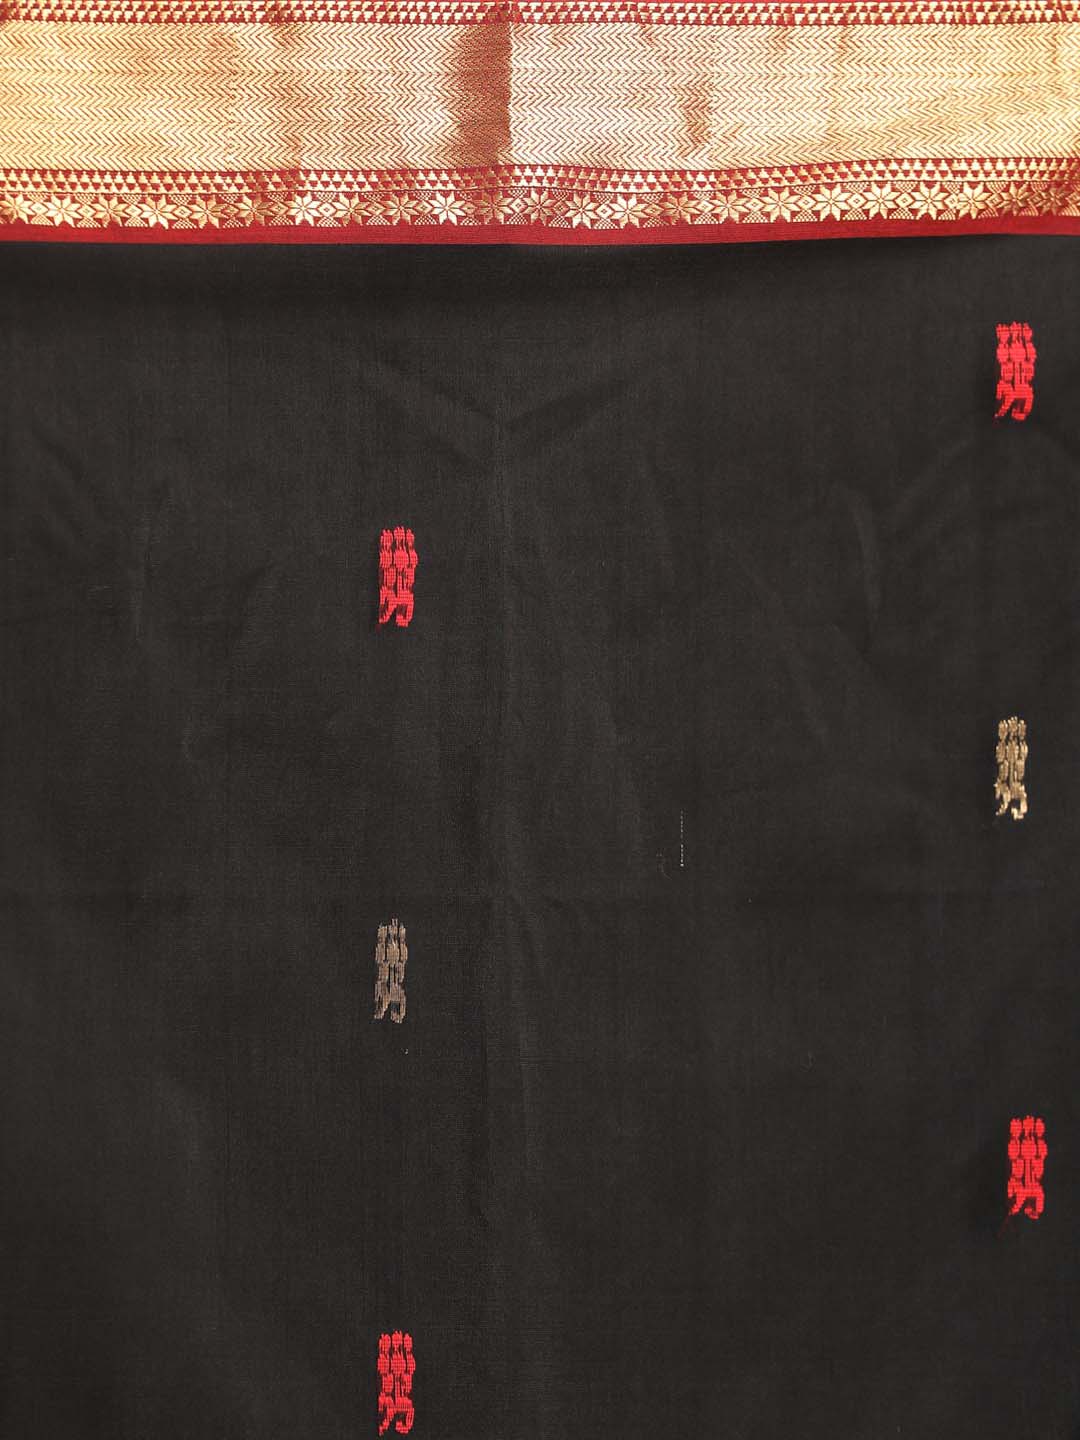 Indethnic Maheshwari Handloom Silk Cotton Saree - Saree Detail View